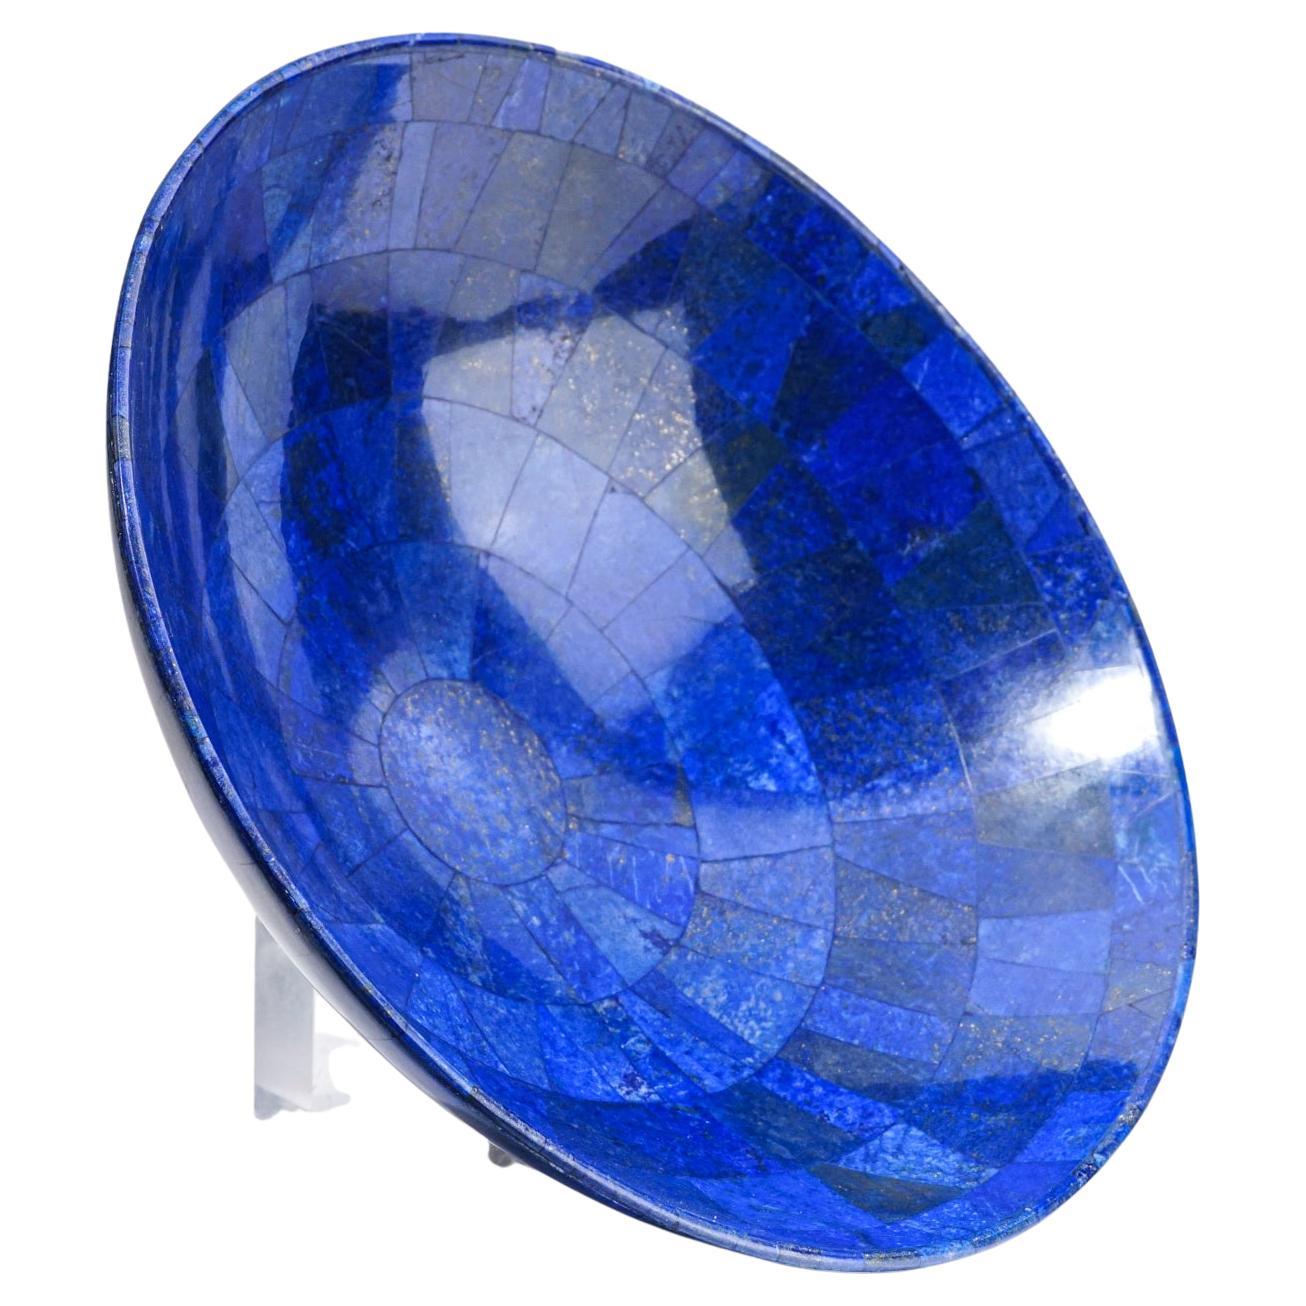 Genuine Polished Lapis Lazuli Bowl (3 lbs) For Sale